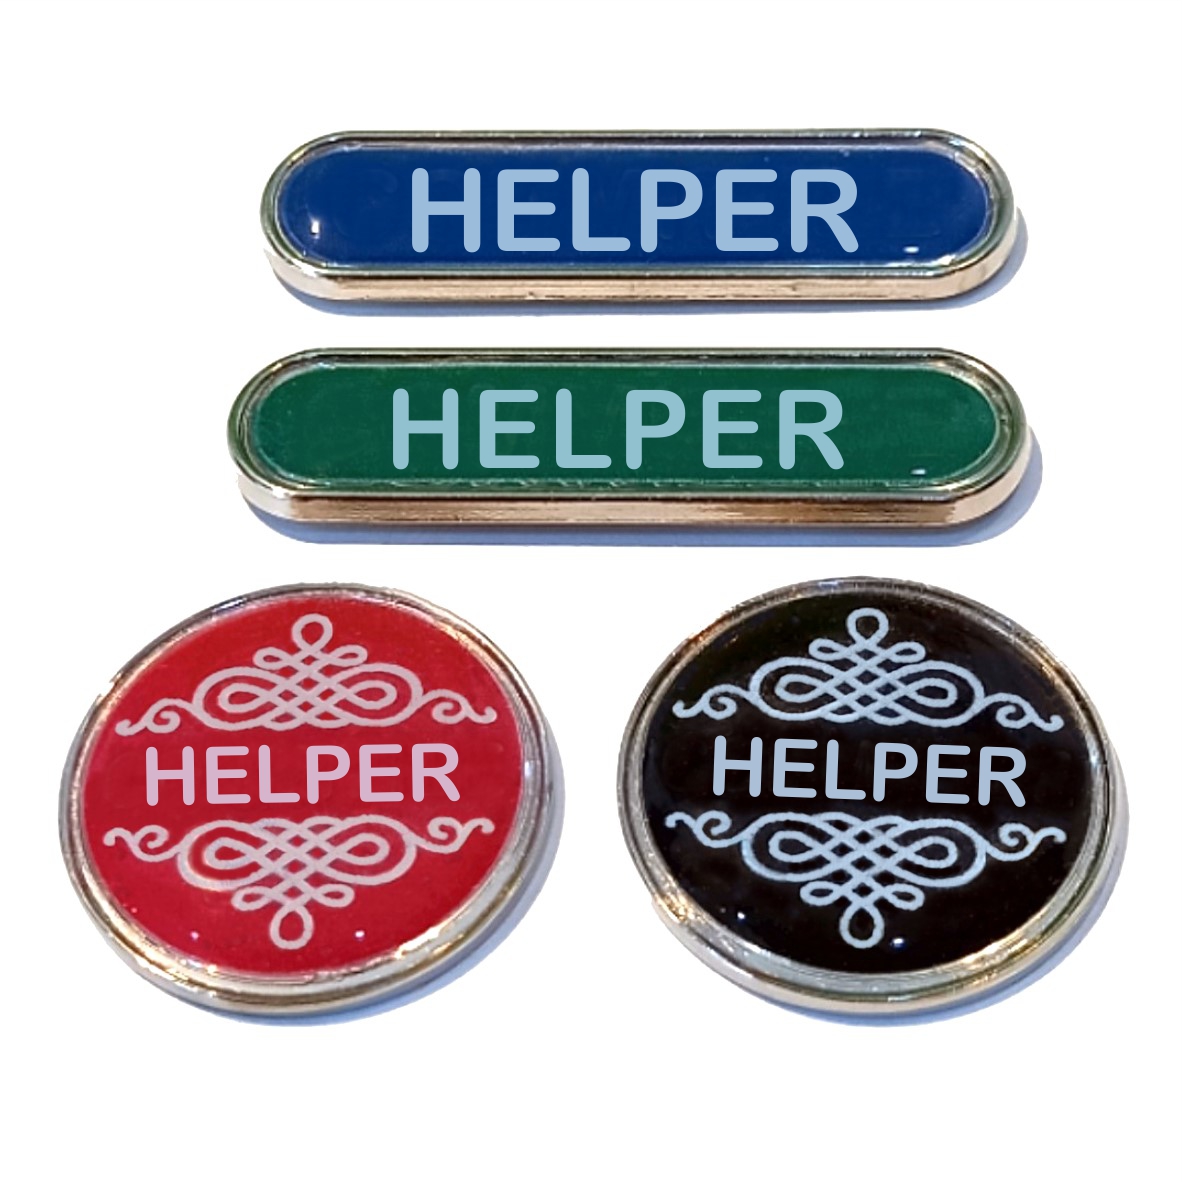 HELPER badge